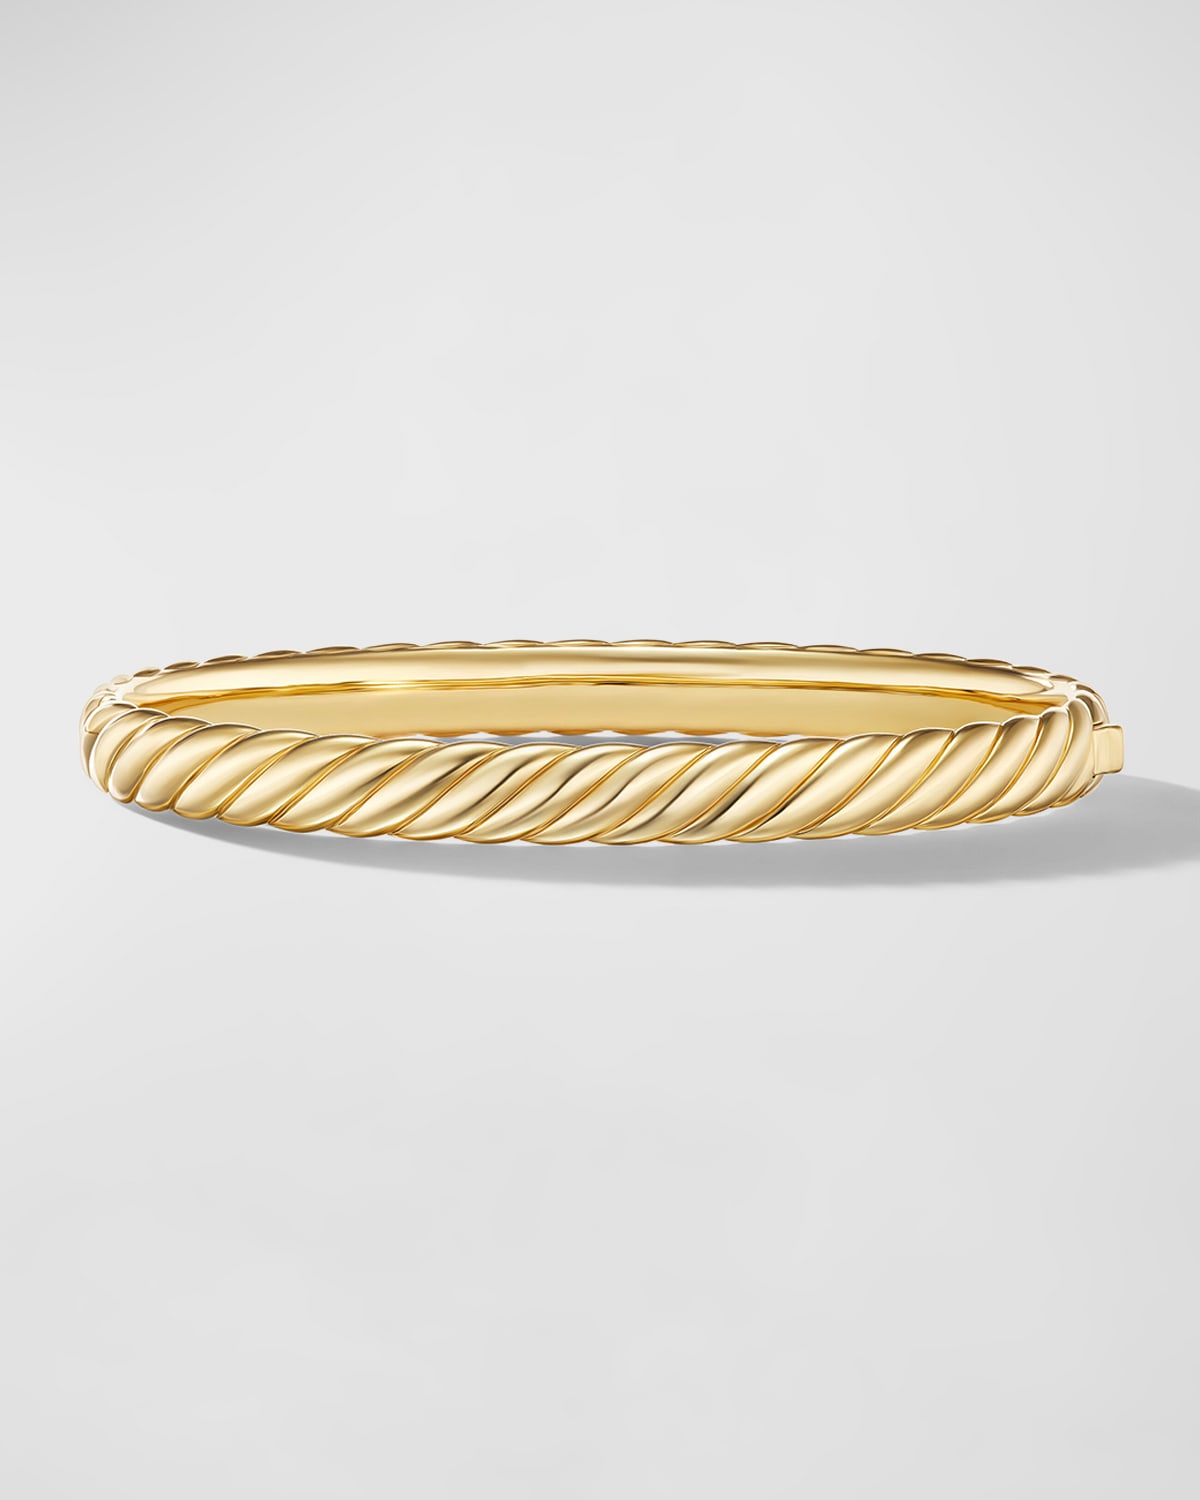 David Yurman Women's Sculpted Cable Bangle Bracelet In 18k Yellow Gold